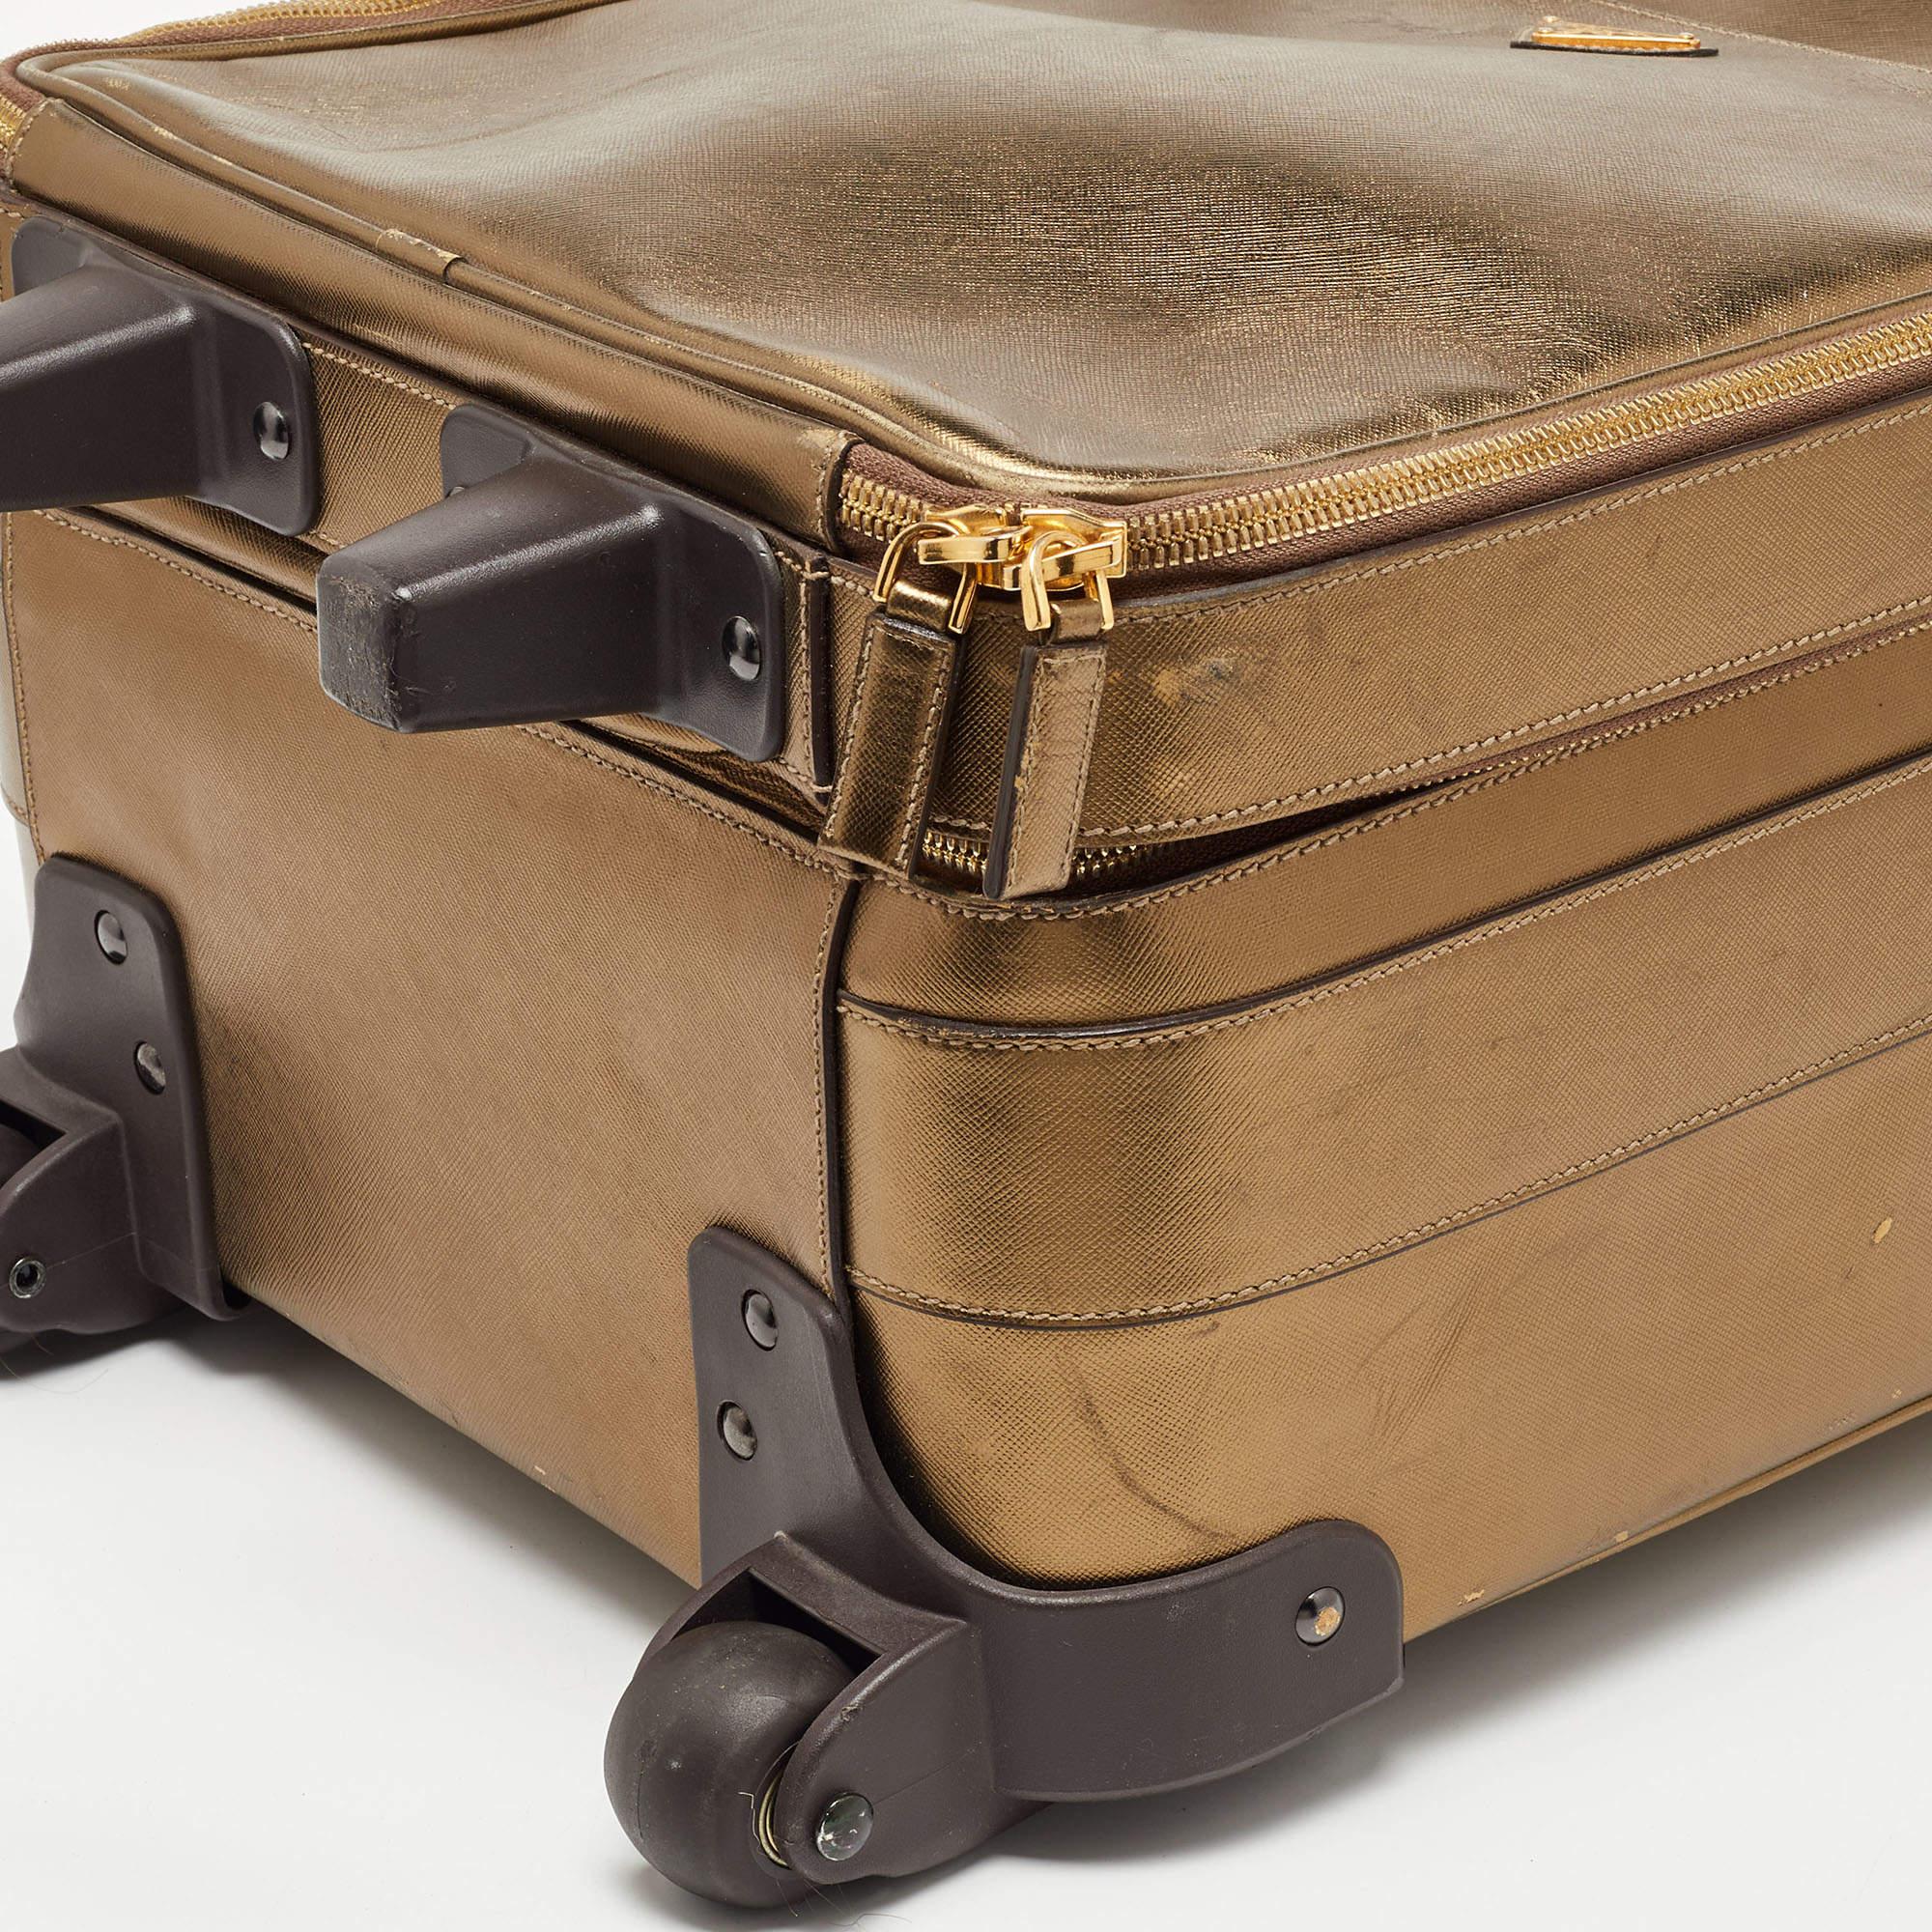 Prada Metallic Gold Saffiano Leather Travel Rolling Trolley Luggage 3